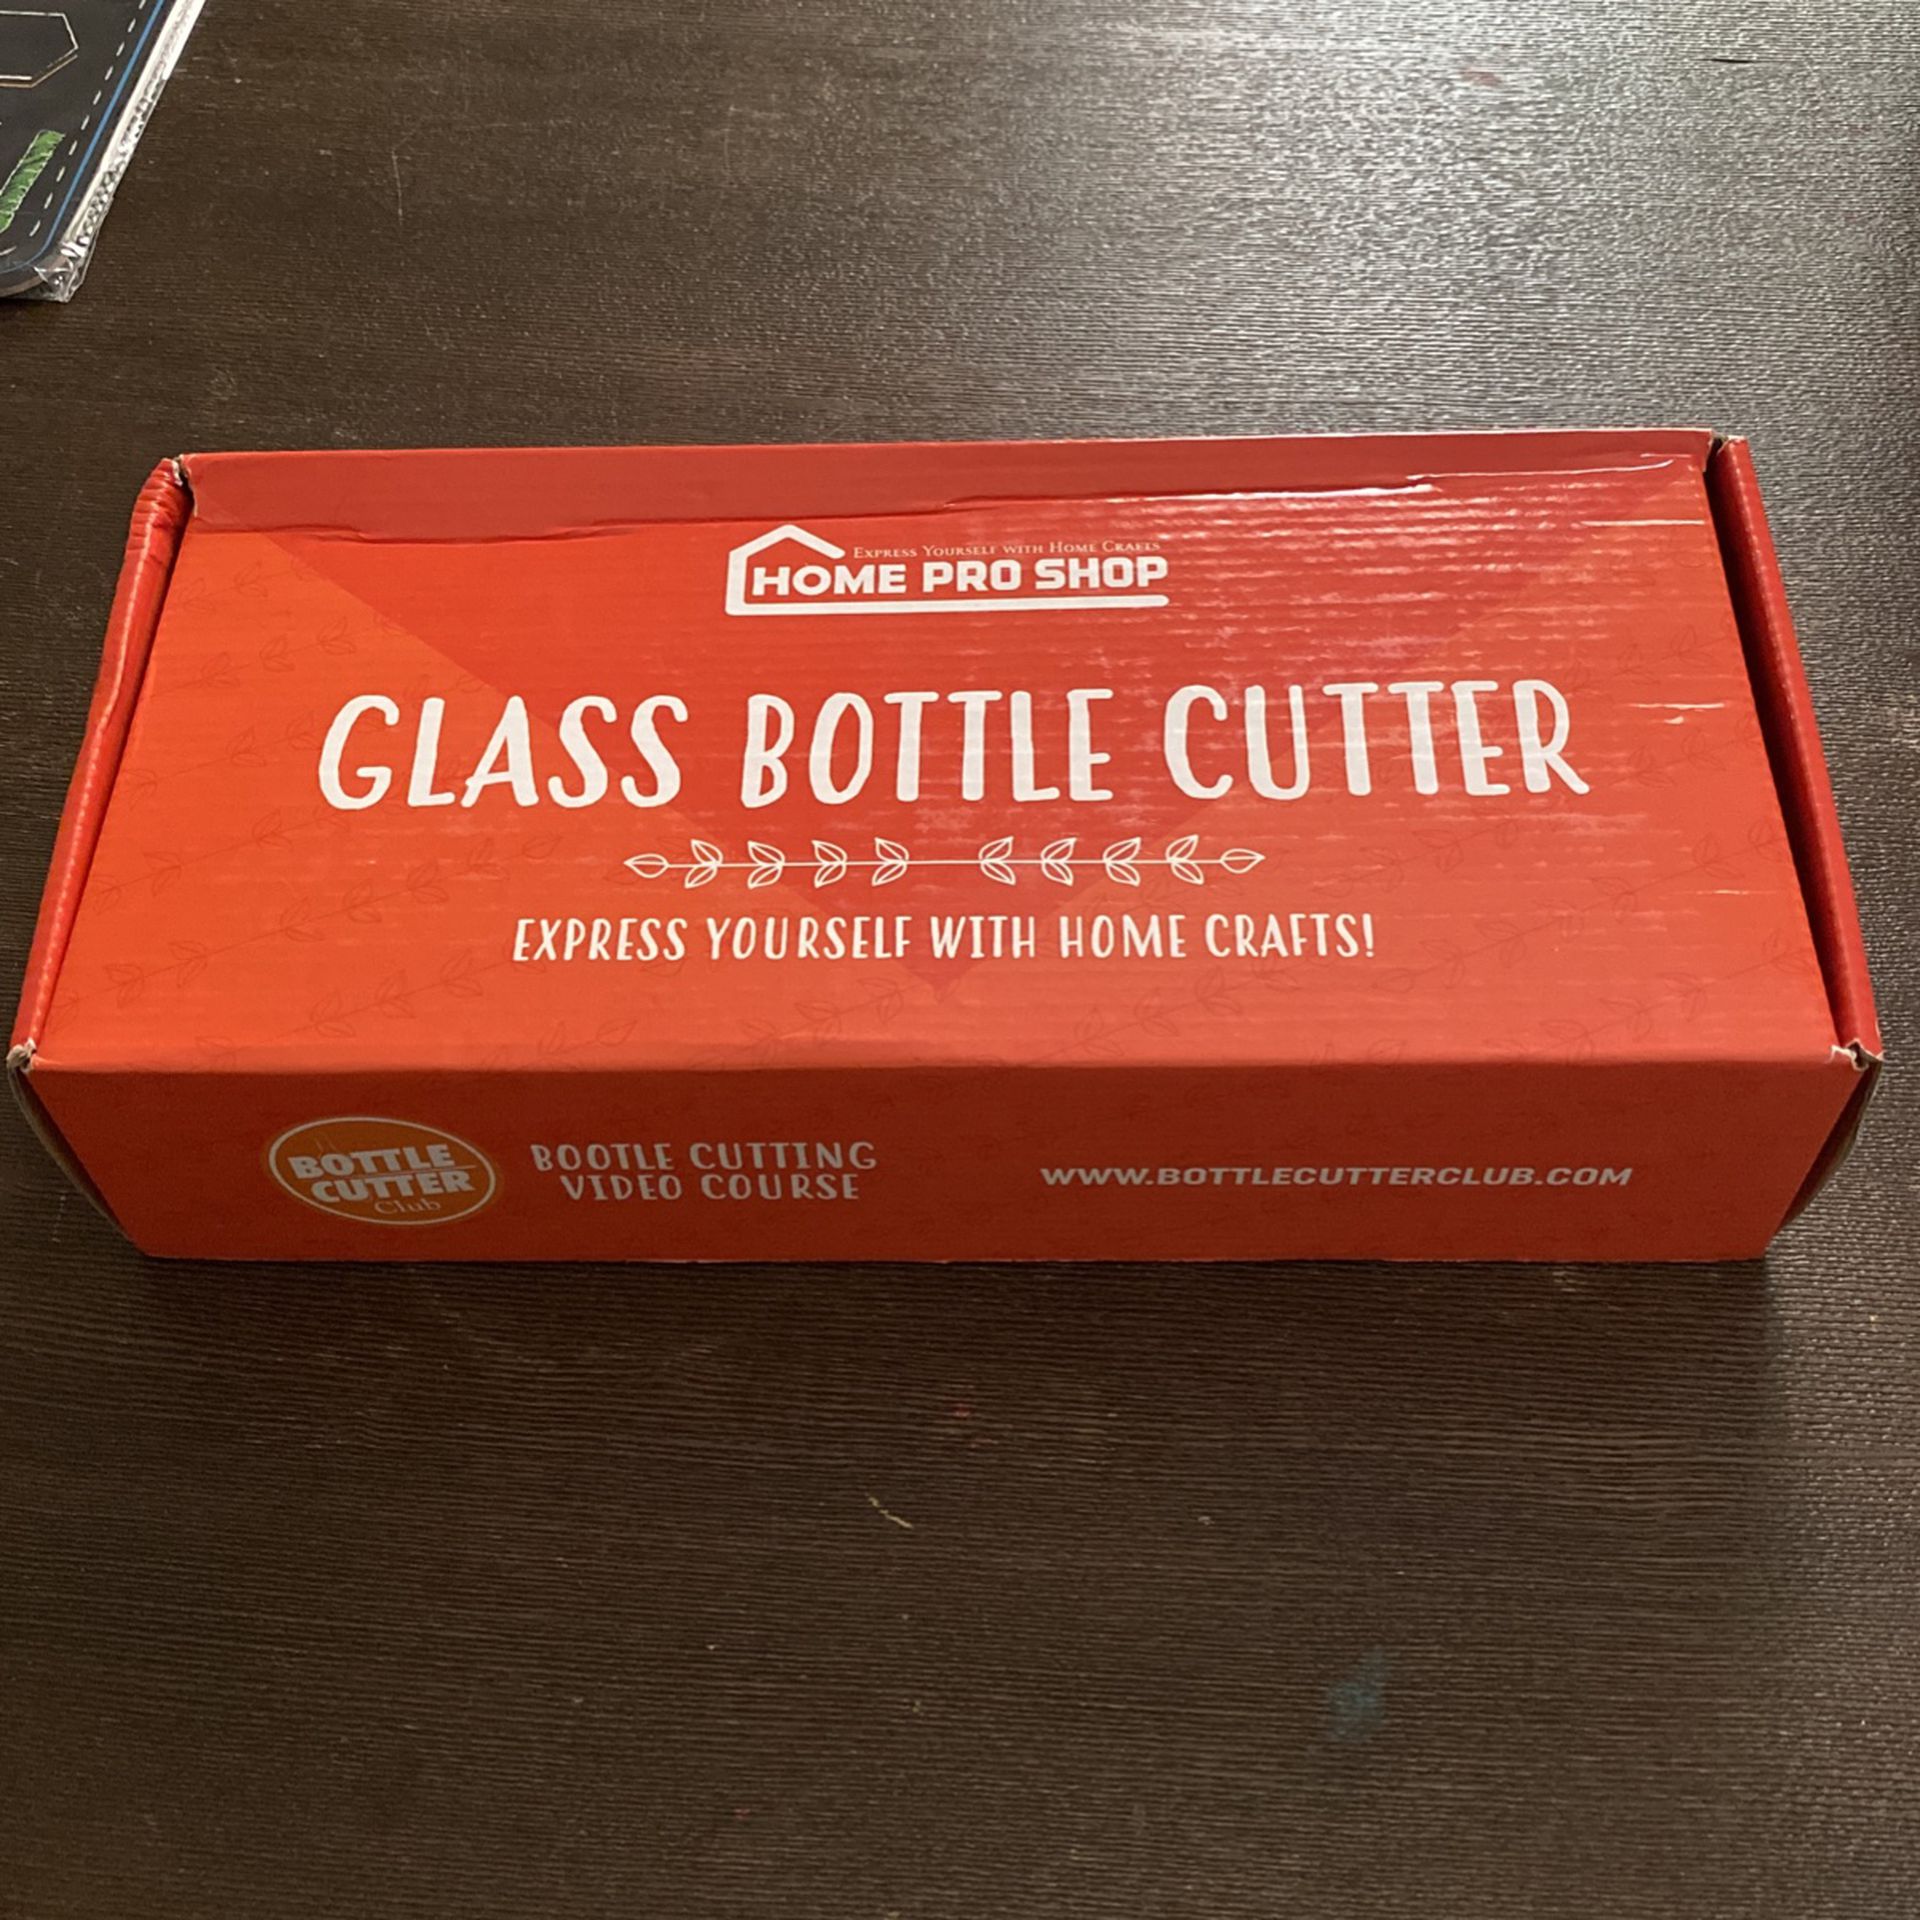 Bottle Cutter & Glass Cutter Kit- Wine Bottle Cutter DIY Tool- Glass Bottle Cutter Kit for Wine, Beer Bottles, Mason Jars - Bottle Cutting Kit w/Safet